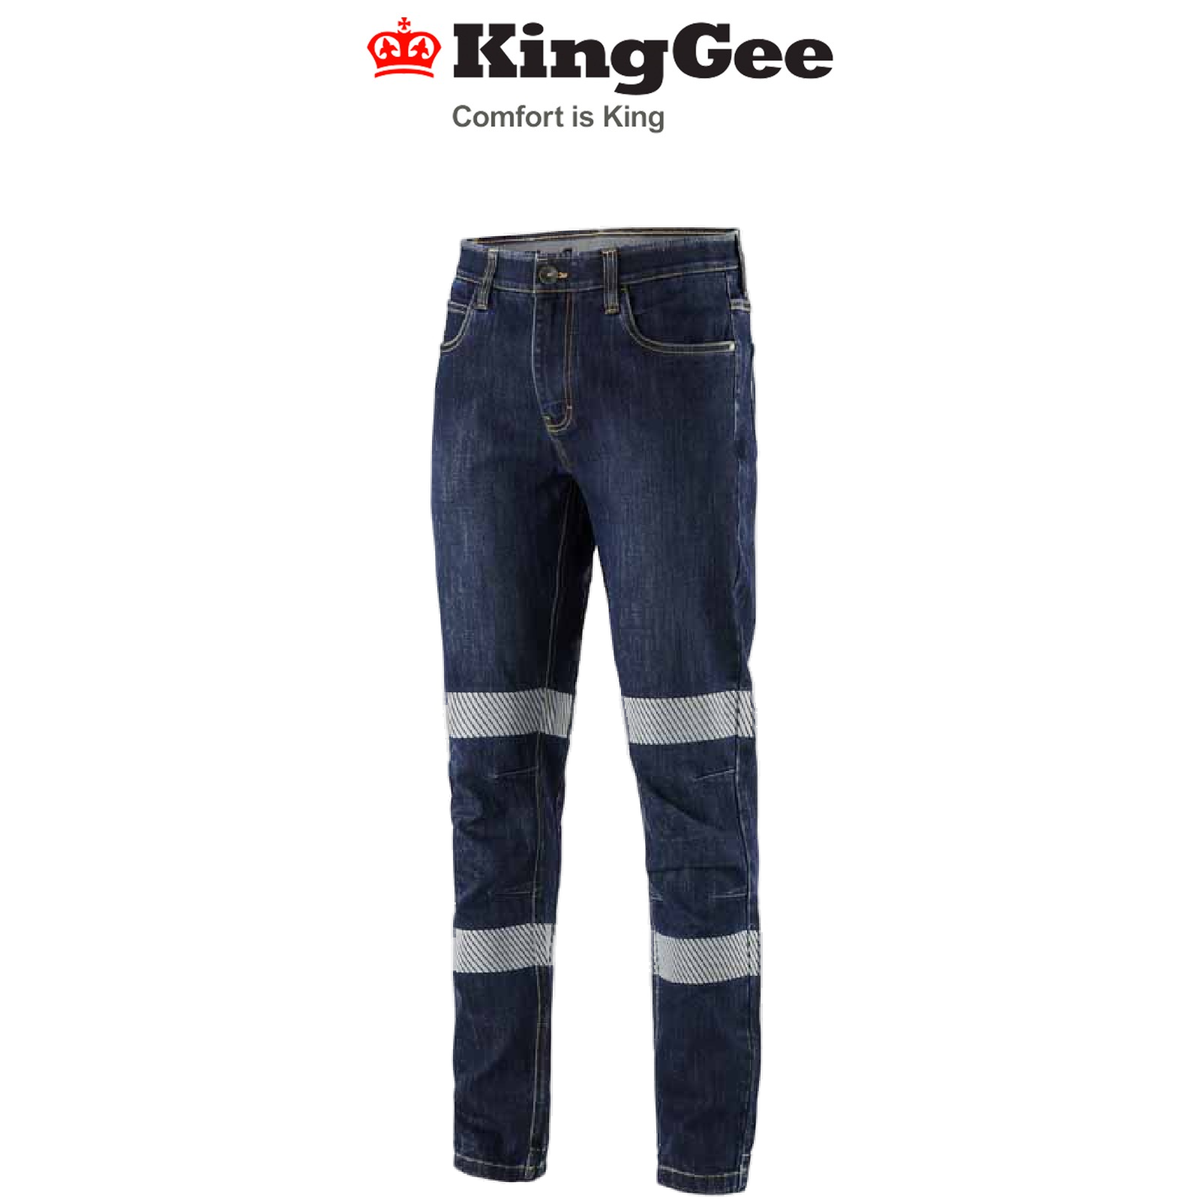 KingGee Mens Urban Coolmax Bio Motion Stretch Jeans Taped Denim Work K53007